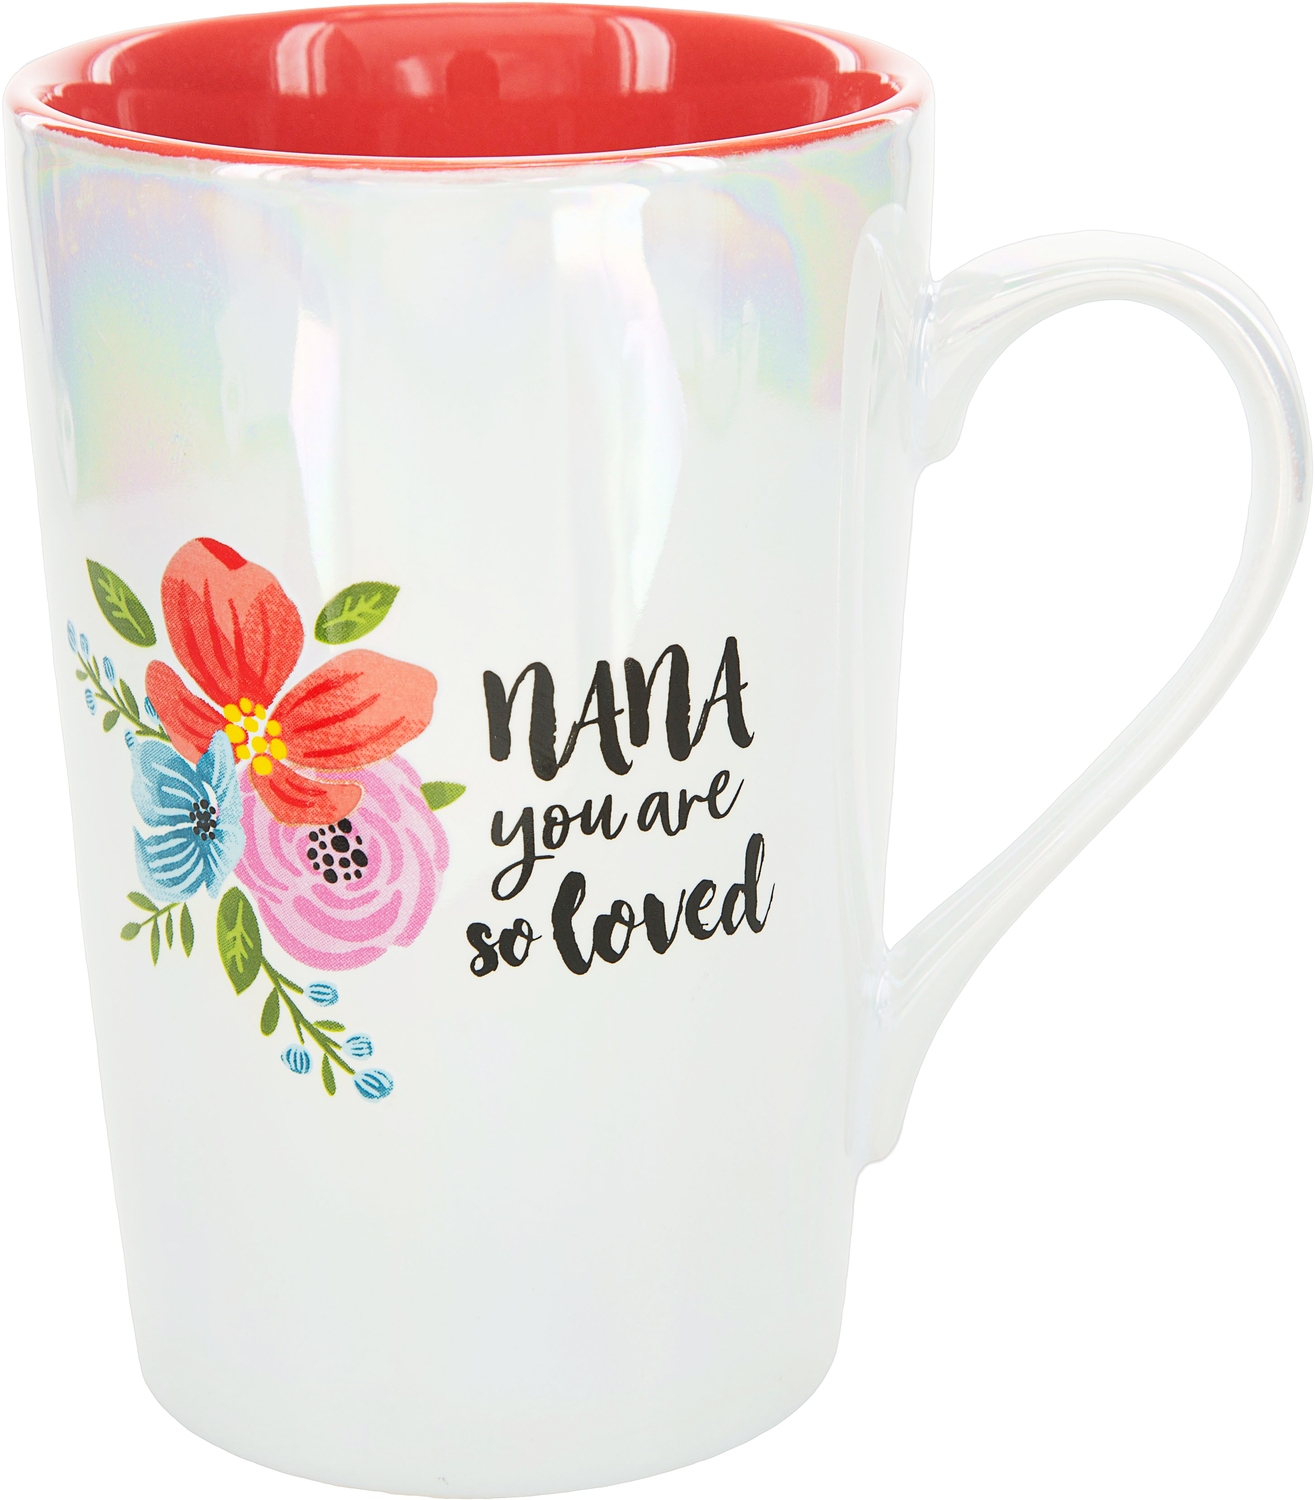 Nana by Bunches of Love - Nana - 15 oz. Latte Cup